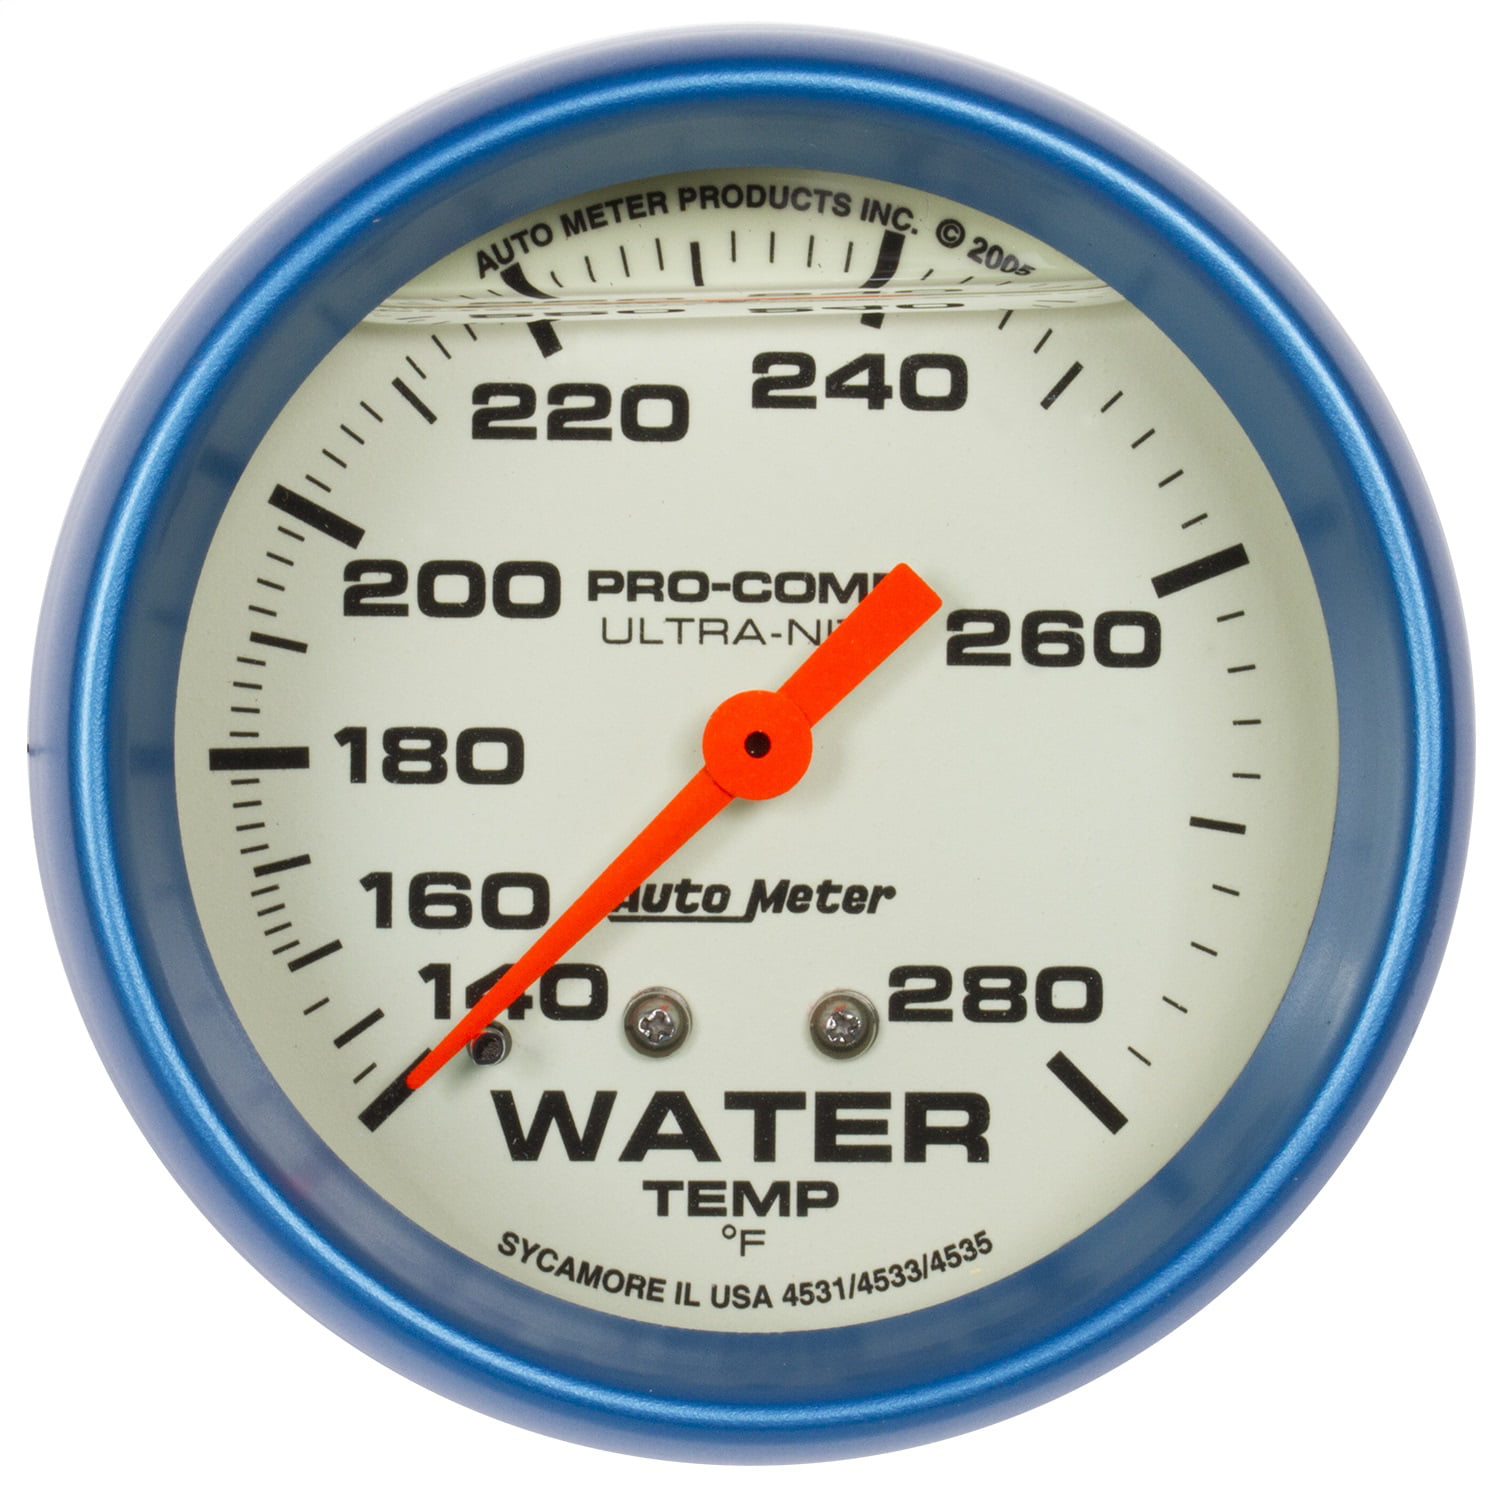 Auto Meter 4235 Ultra-Nite Water Temperature Gauge 